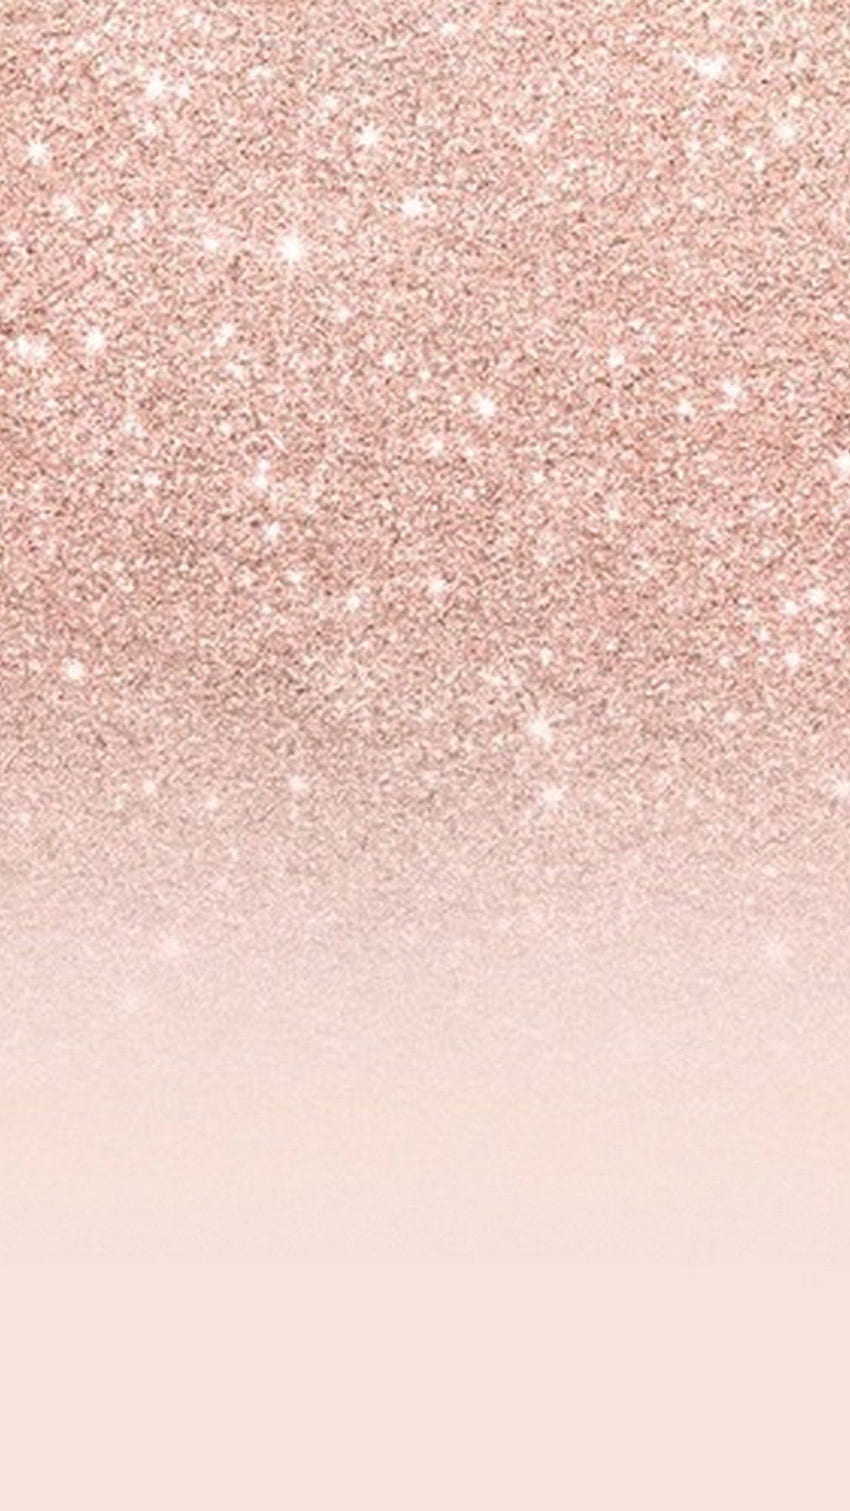 Marmer Rose Gold Pink Resolusi Tinggi wallpaper ponsel HD